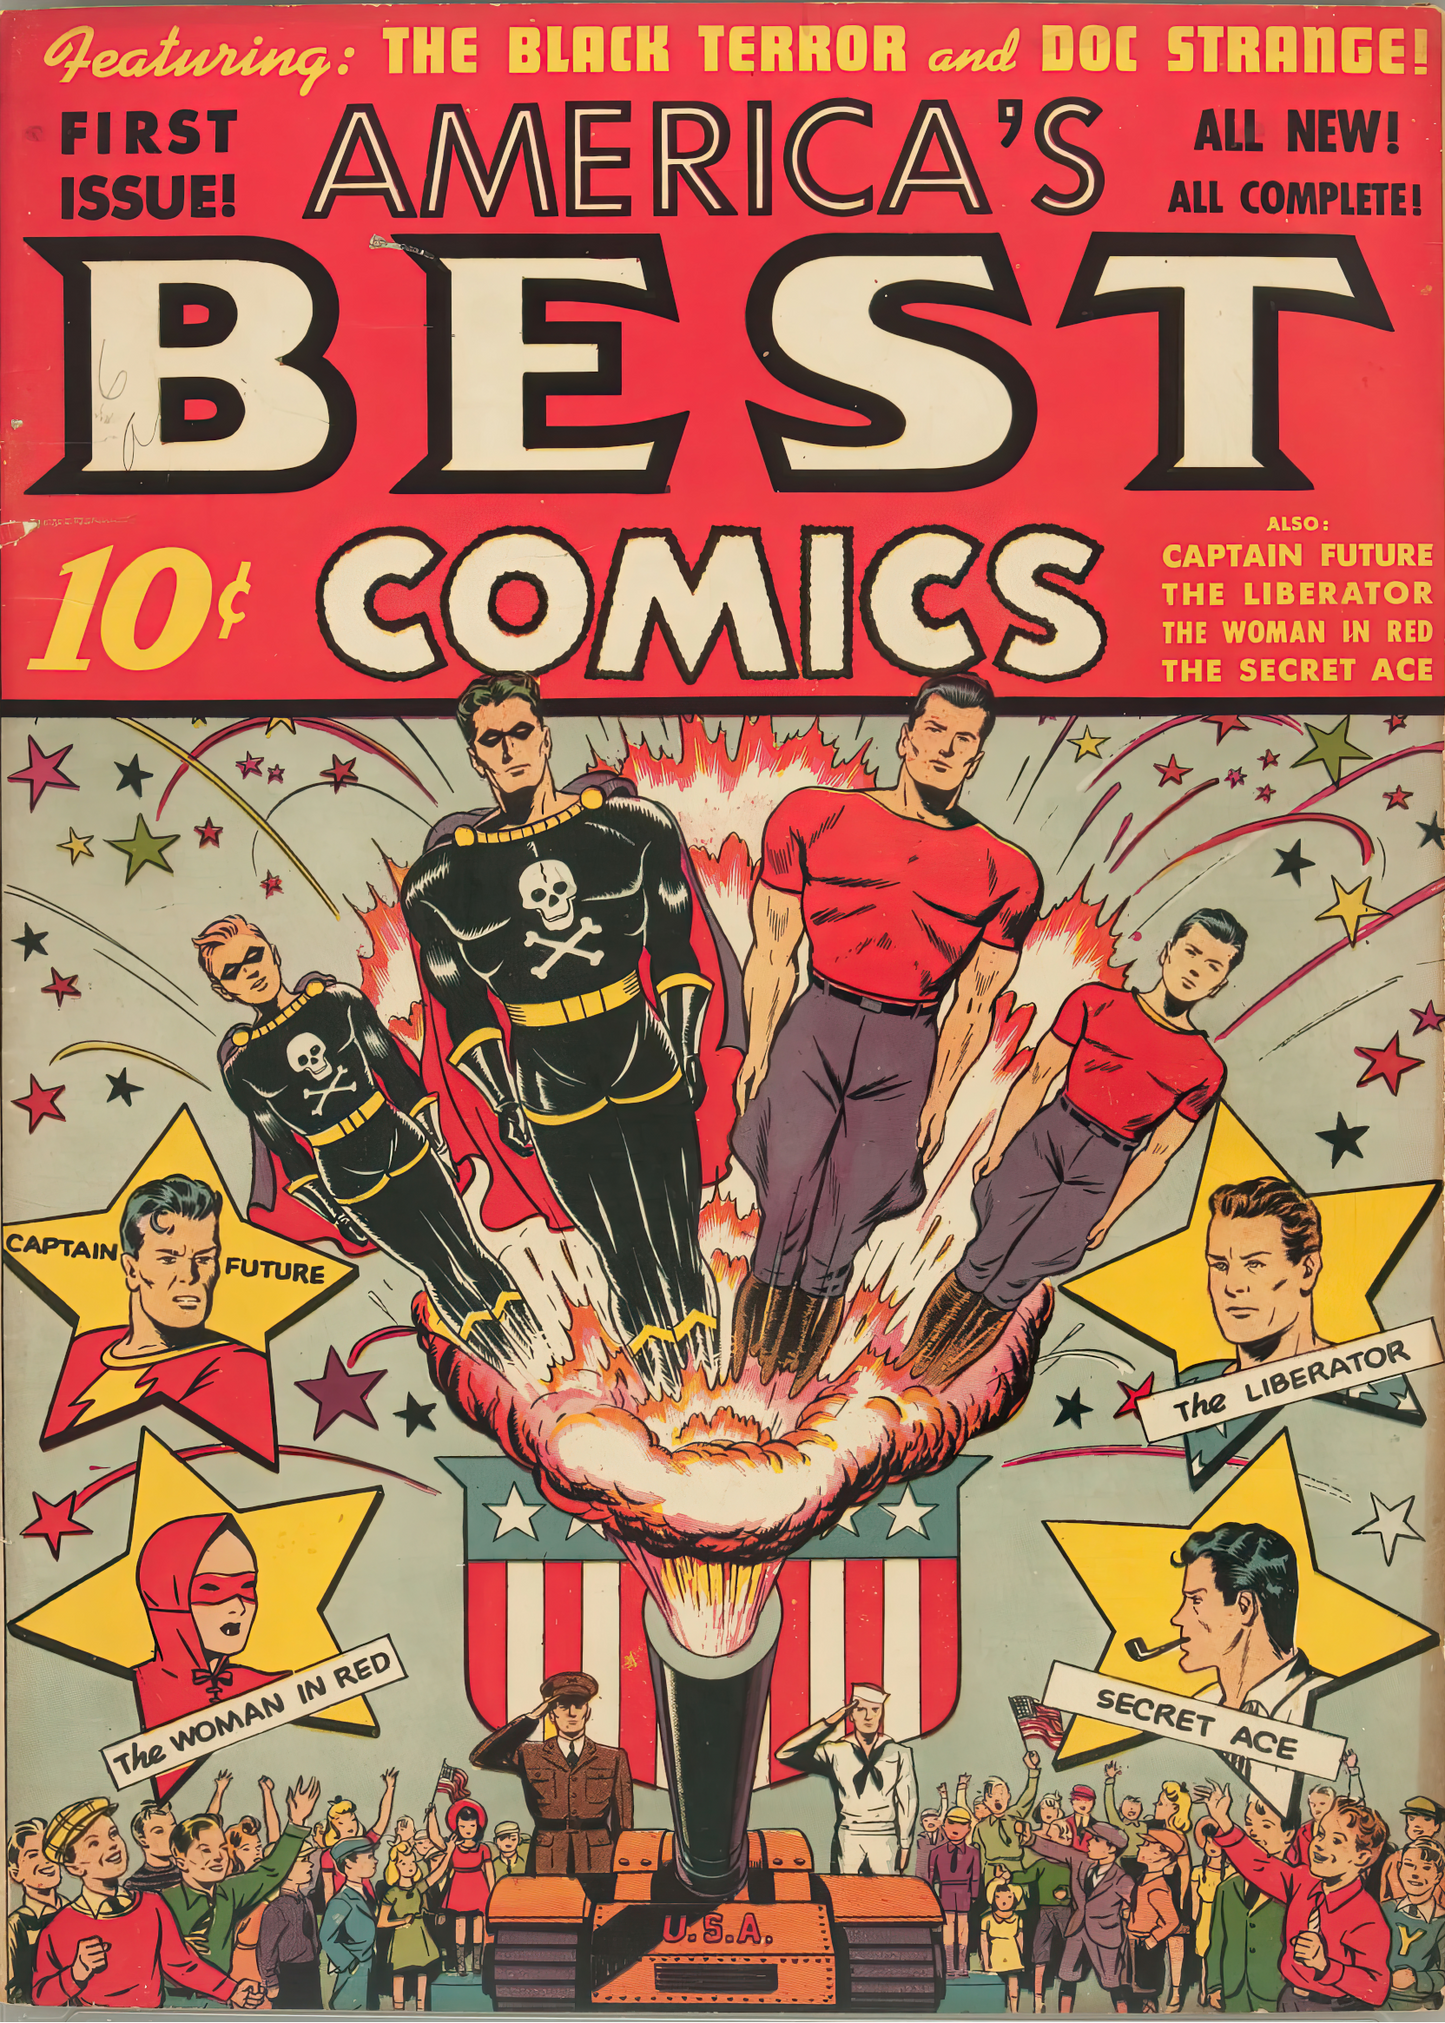 #950 Americas best comics